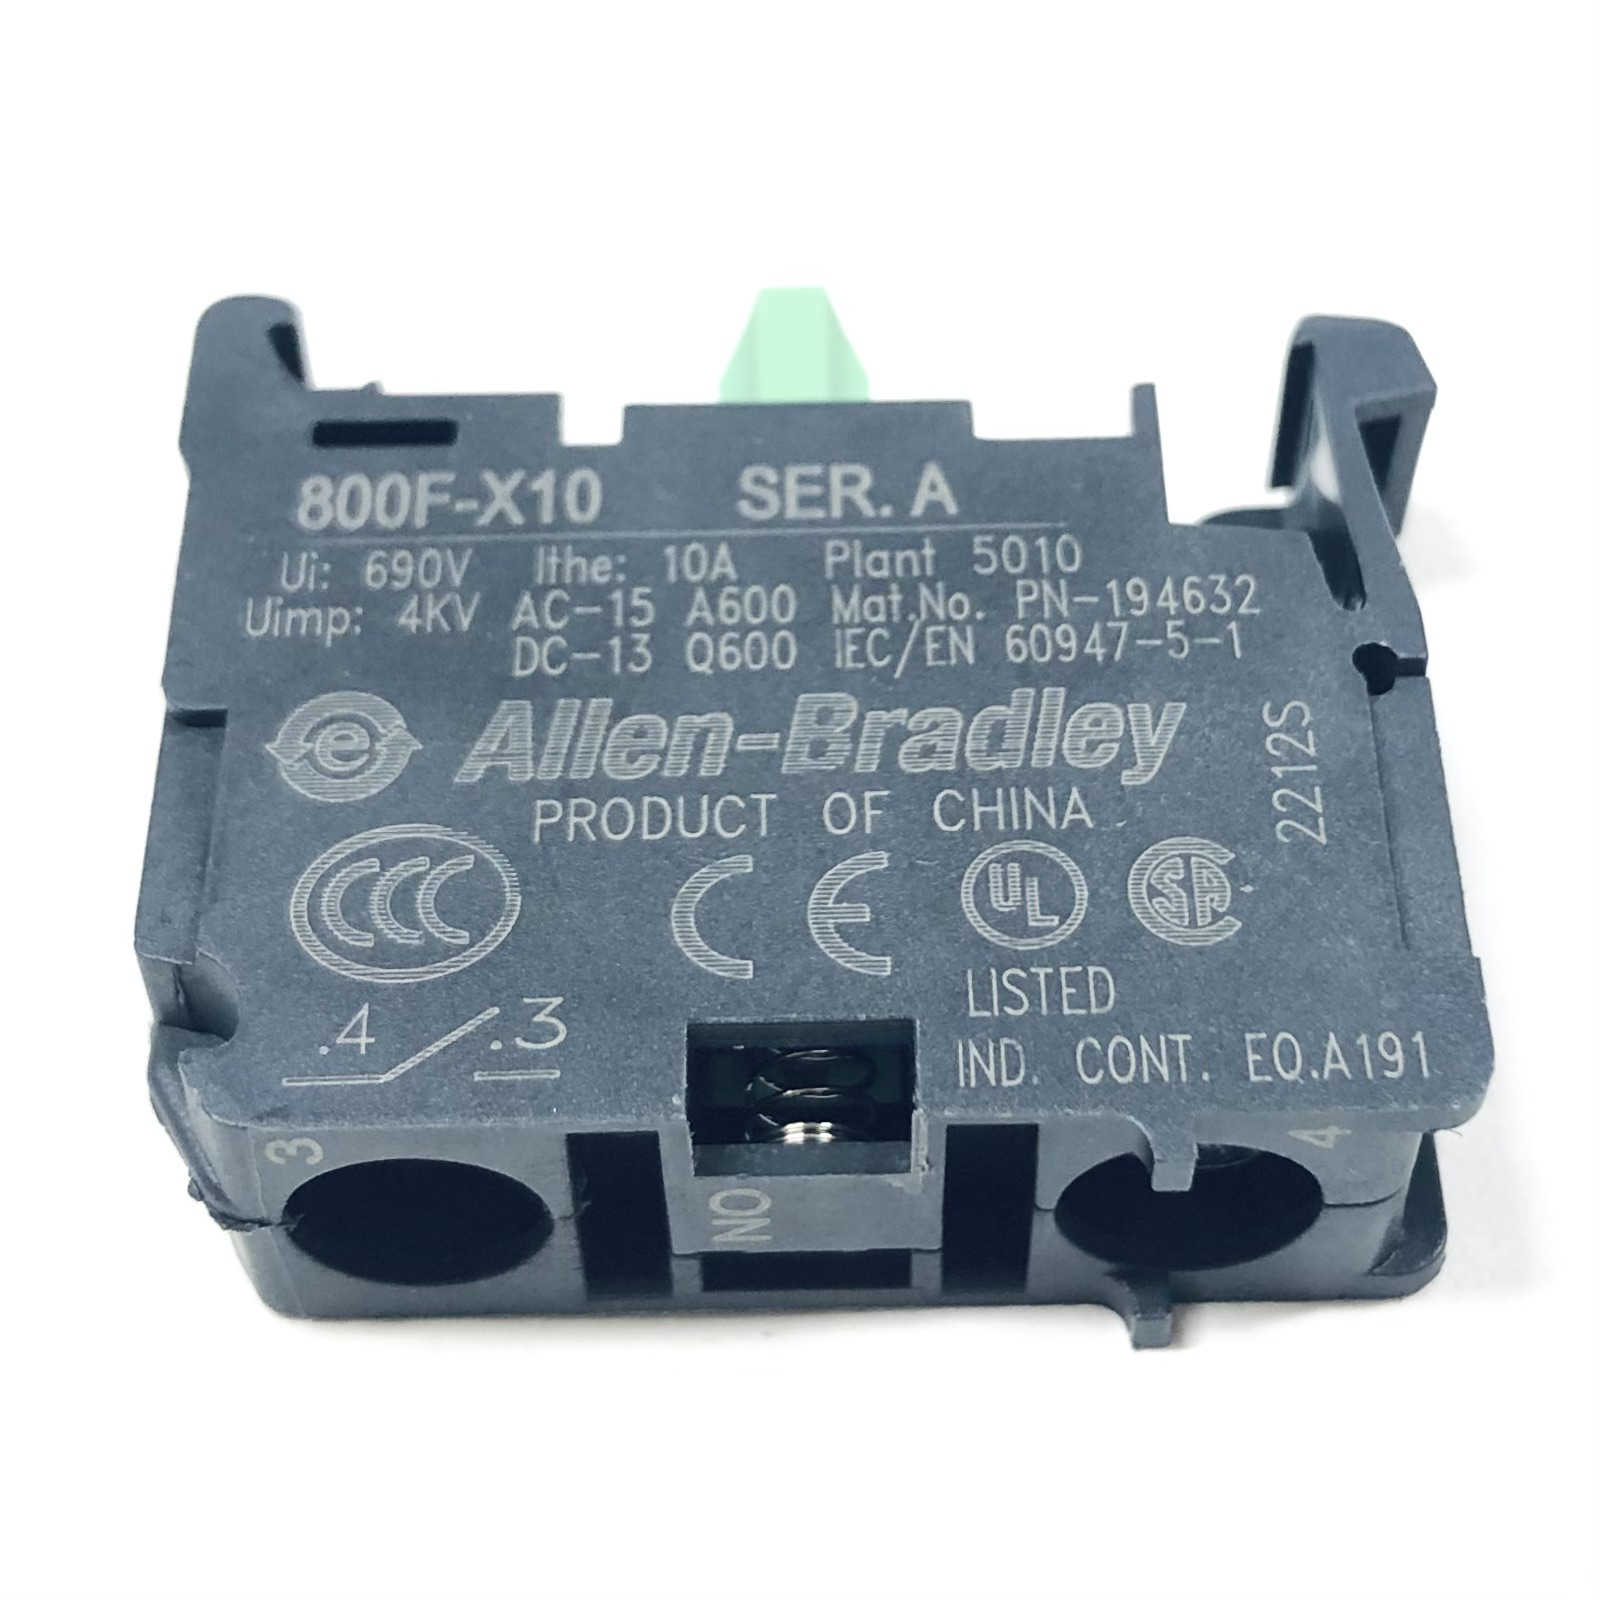 800F-X10 Allen-Bradley SER. A Contact Block, 690V, 10A